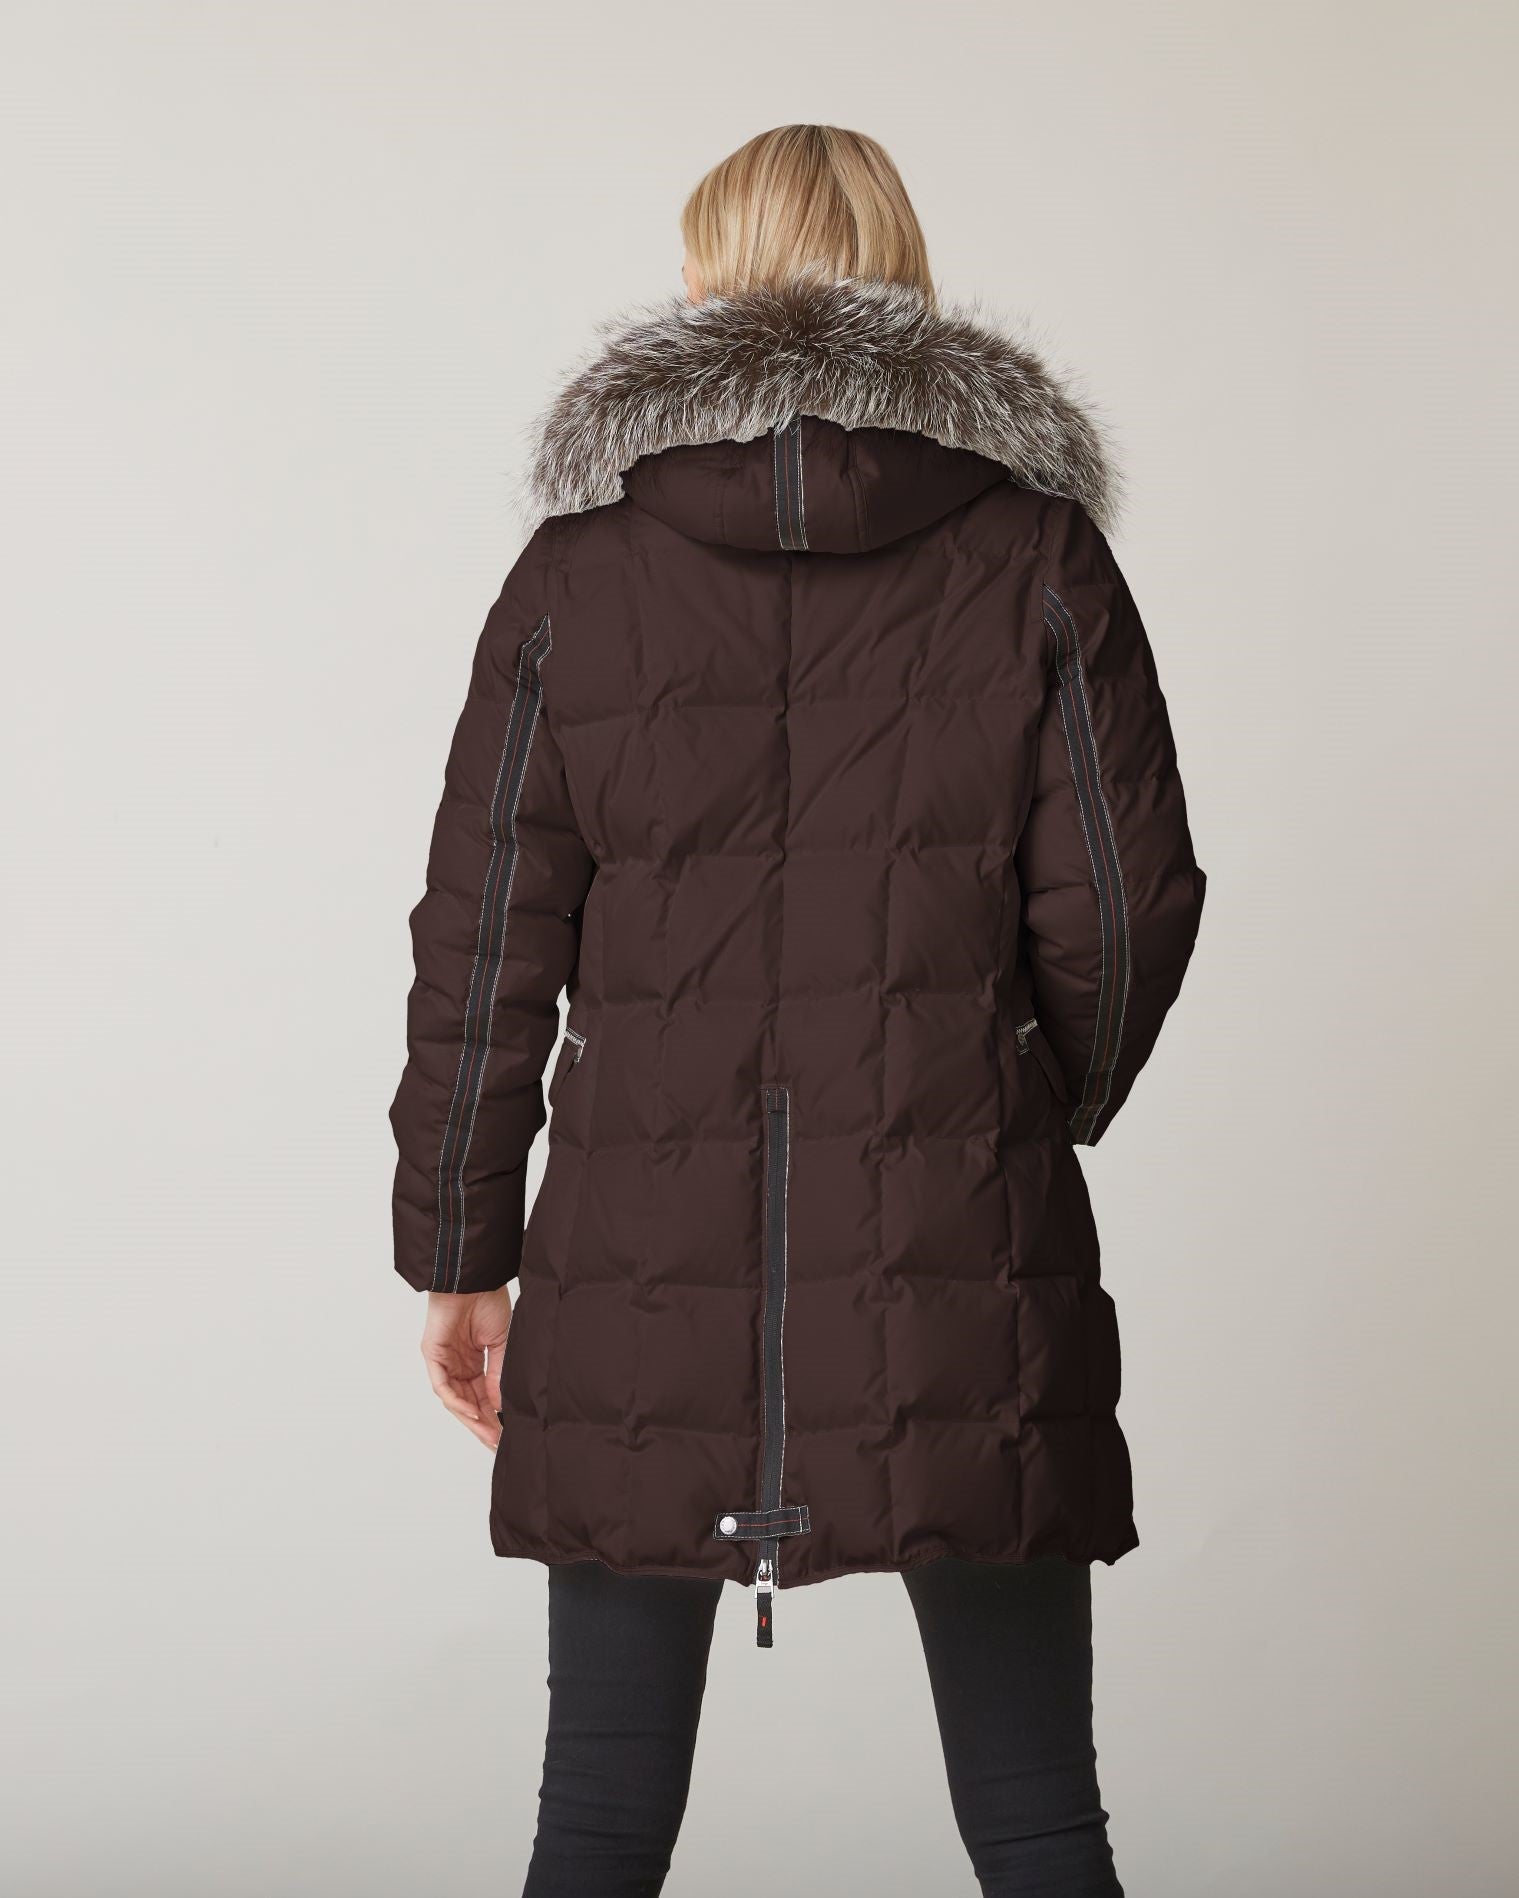 Jackets & Junge Women Premium Down | Coats | Jackets for